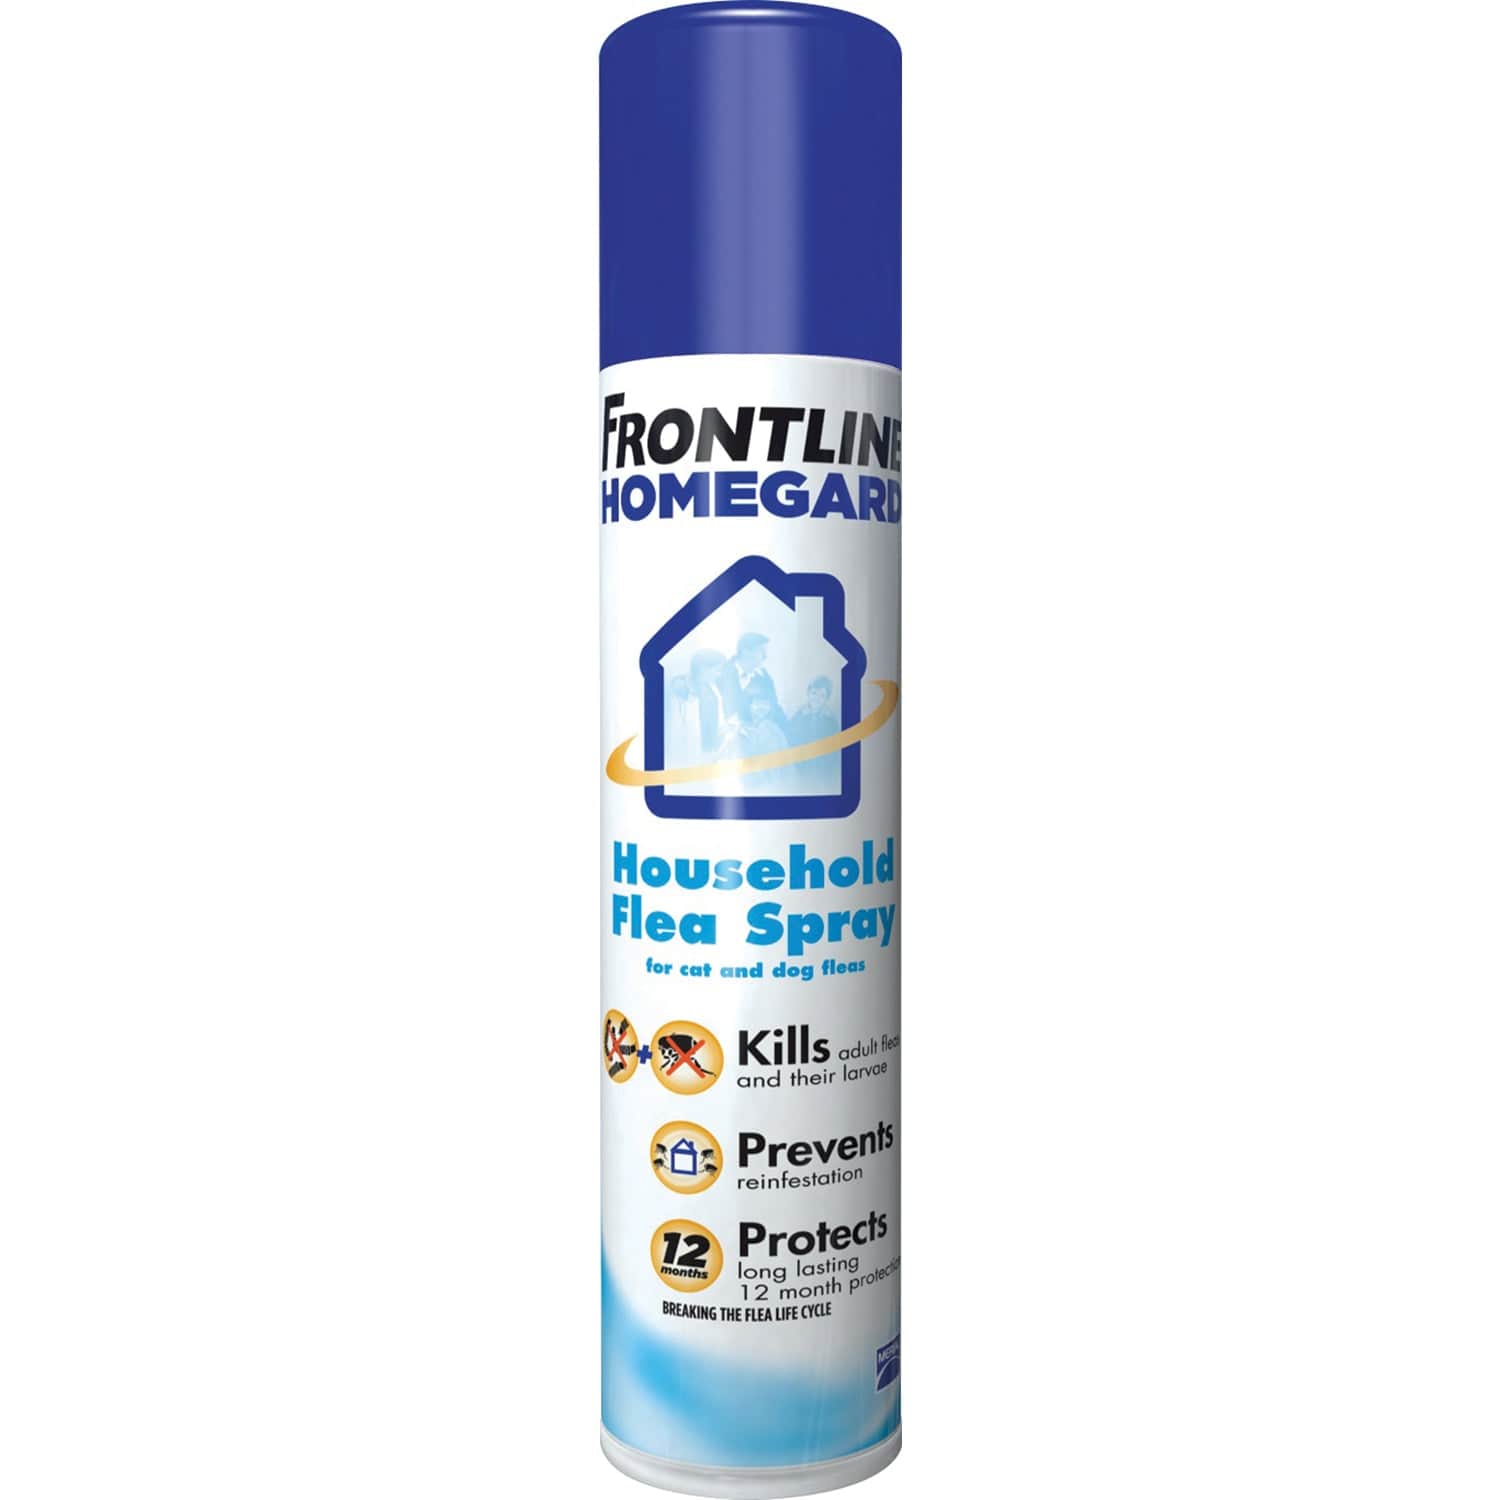 Frontline homegard household flea spray